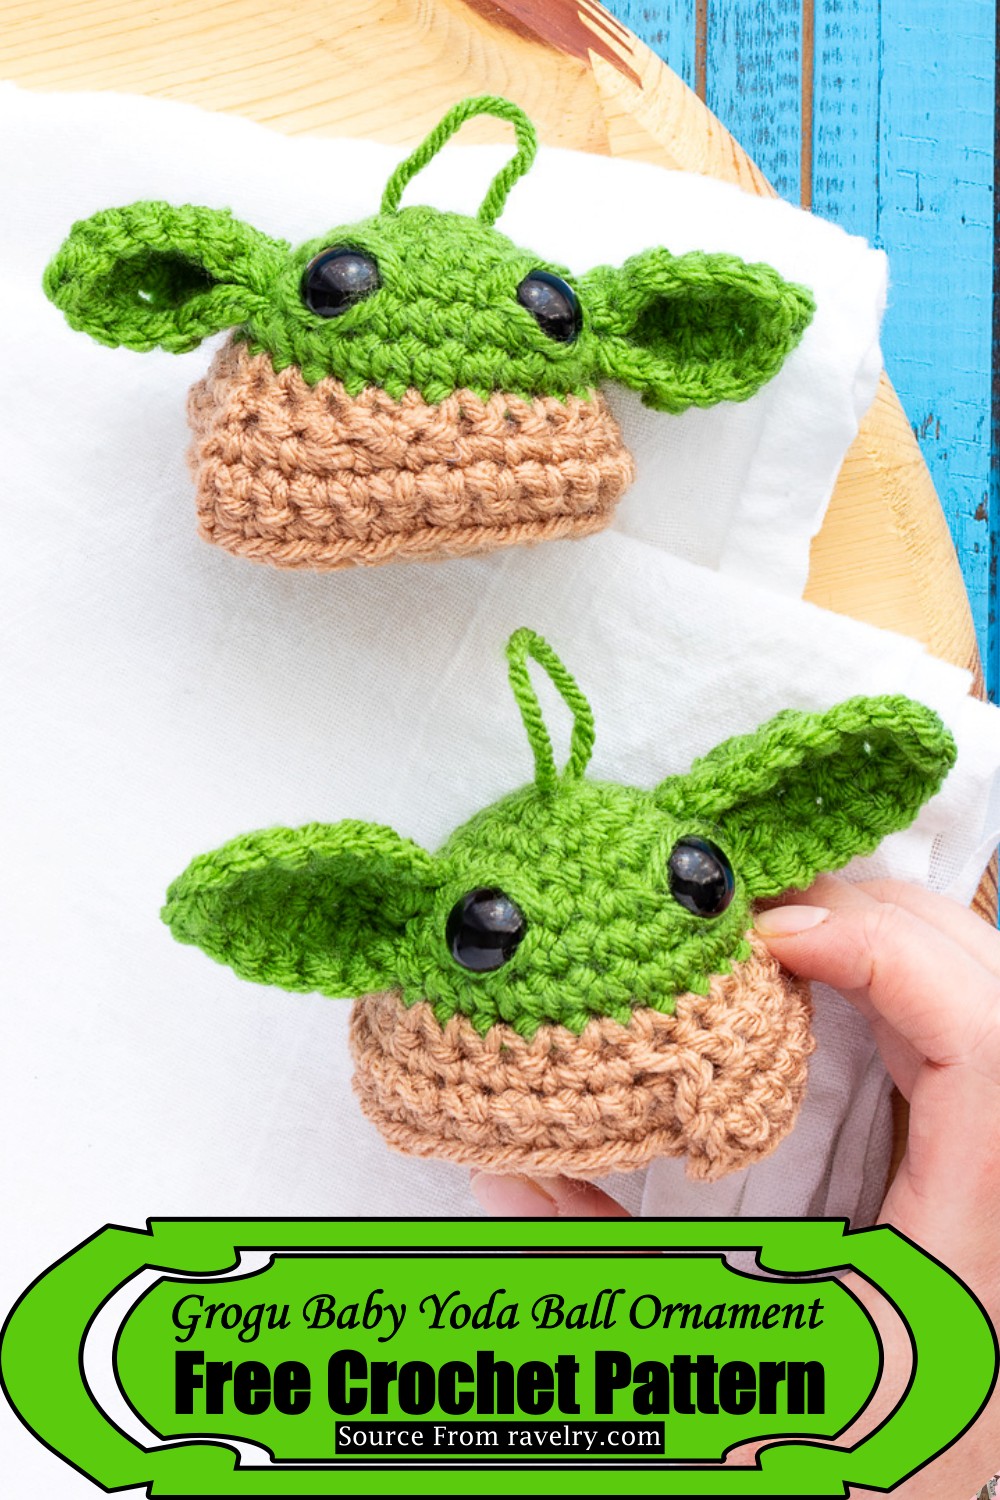 Crochet Grogu Baby Yoda Ball Ornament Pattern